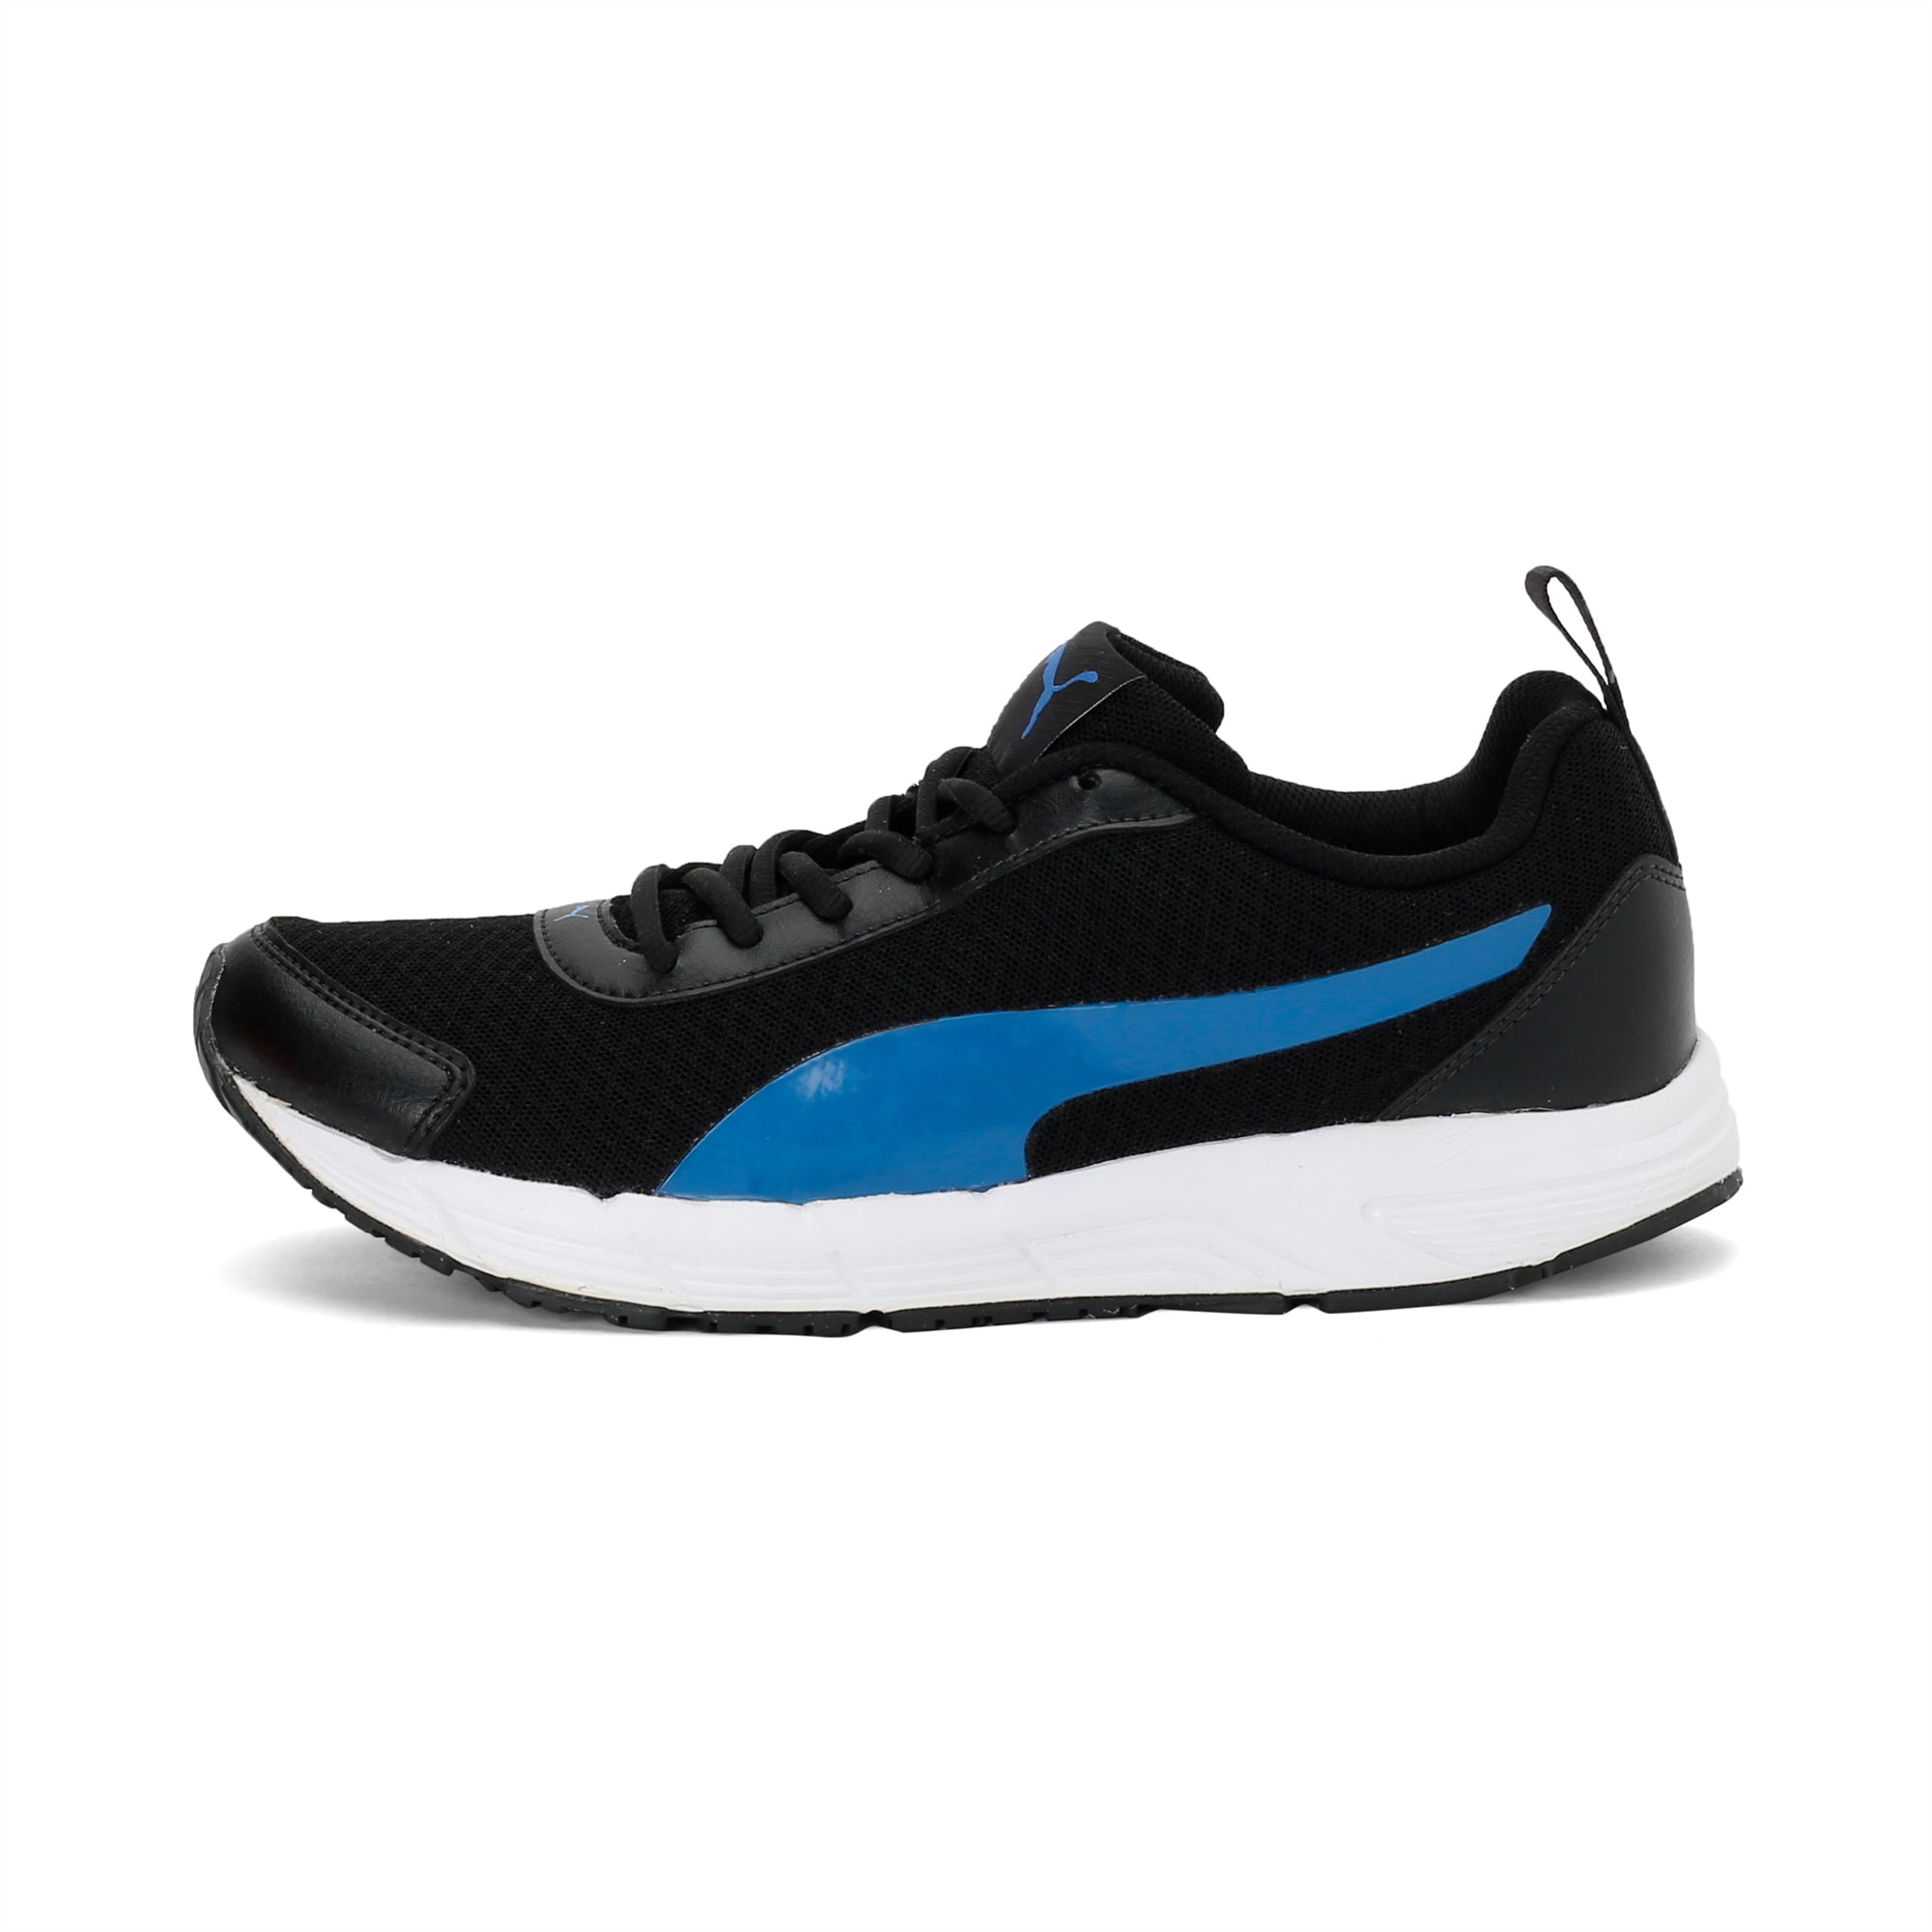 blue puma running shoes